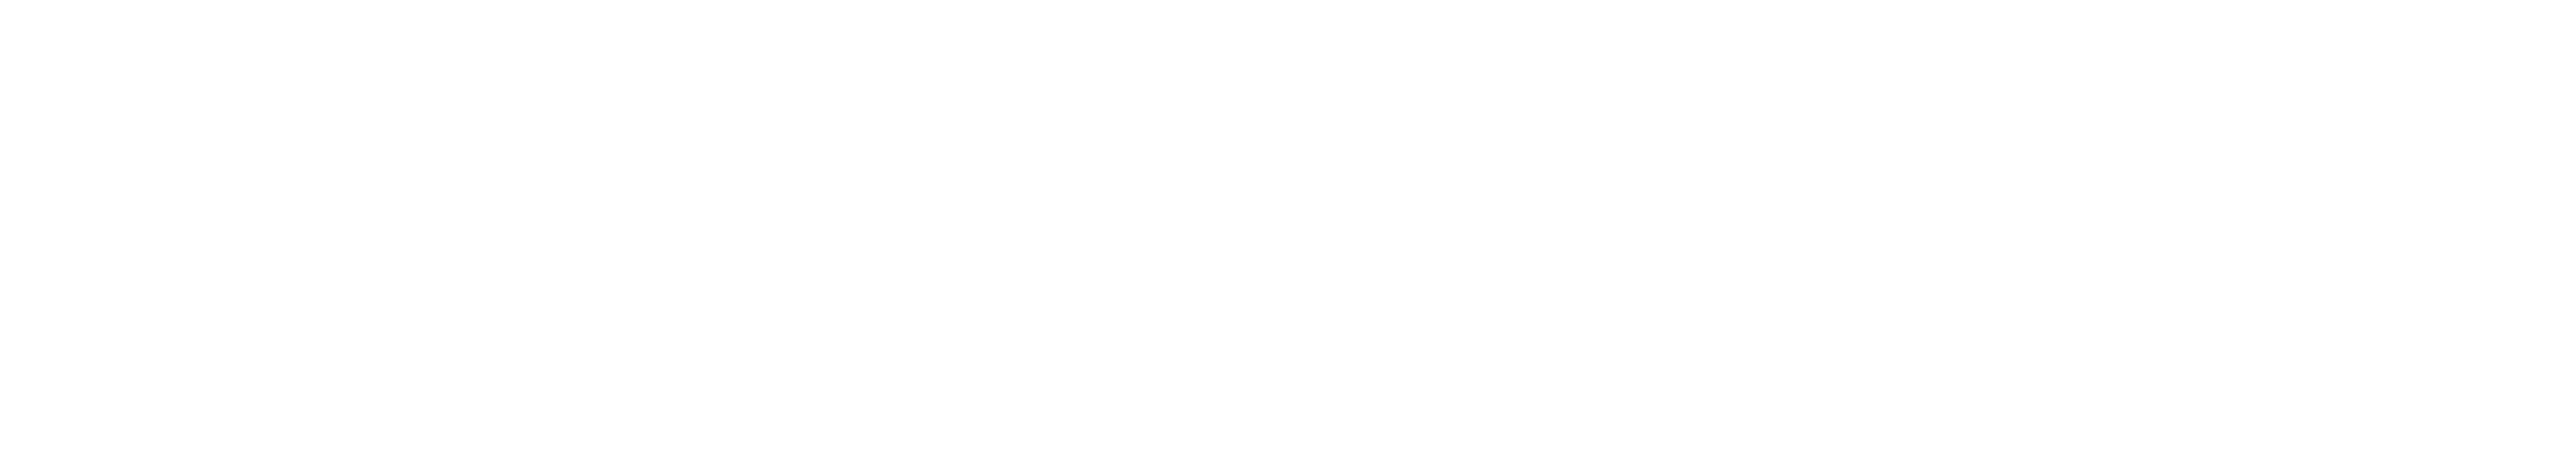 dana Poloni - logo white